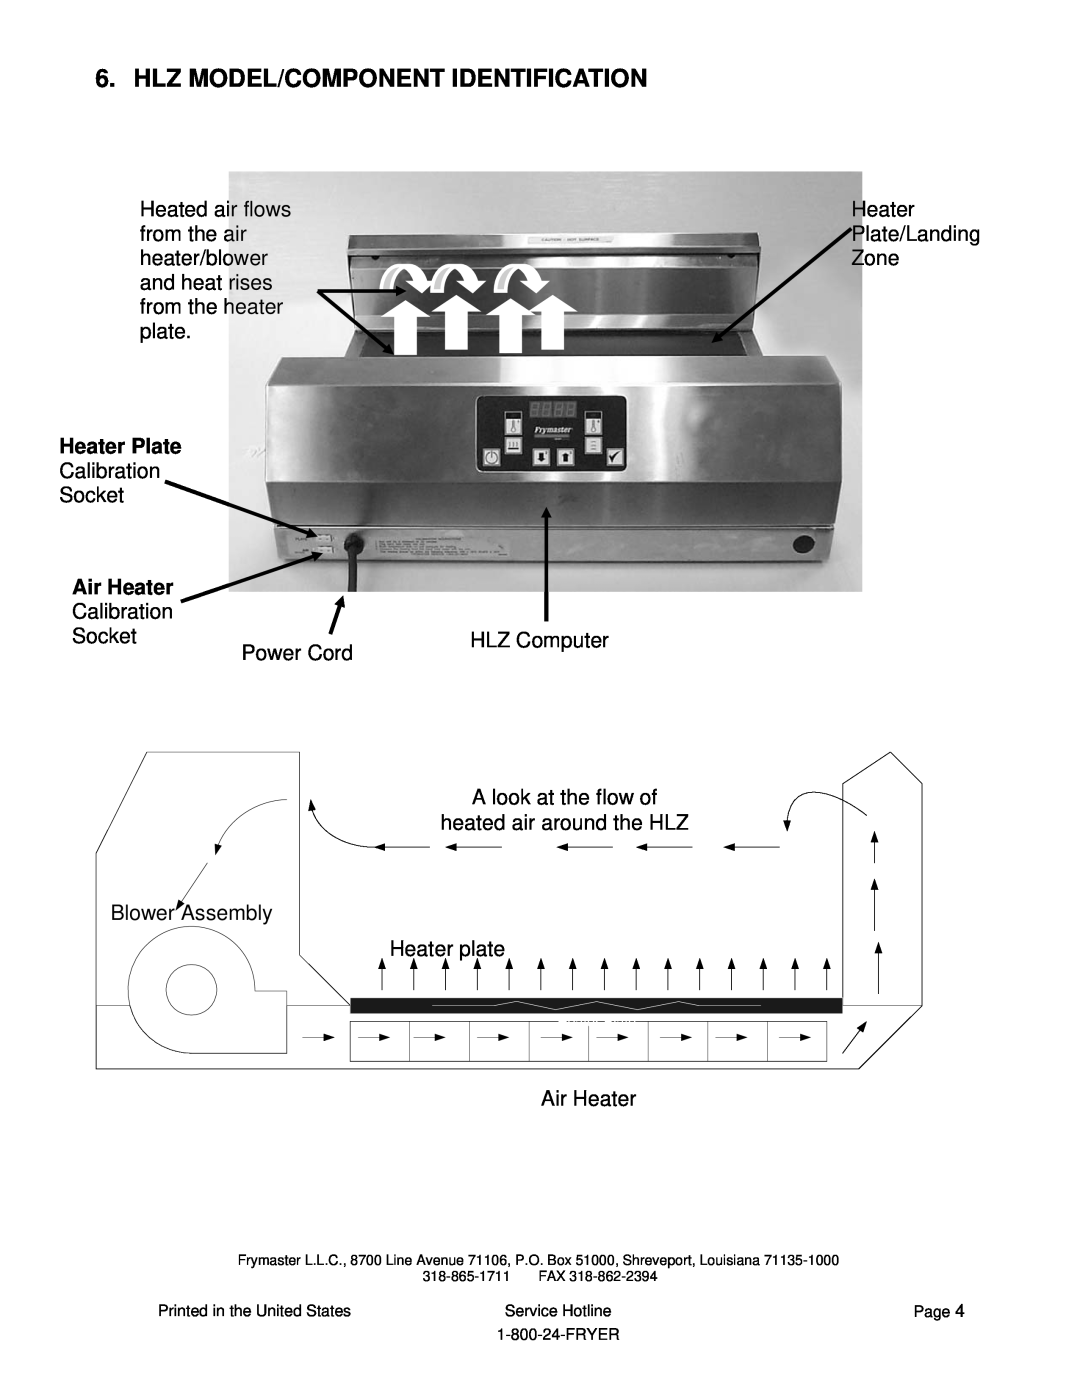 Frymaster HLZ 22, HLZ 18 service manual Hlz Model/Component Identification, Heater Plate, Air Heater 